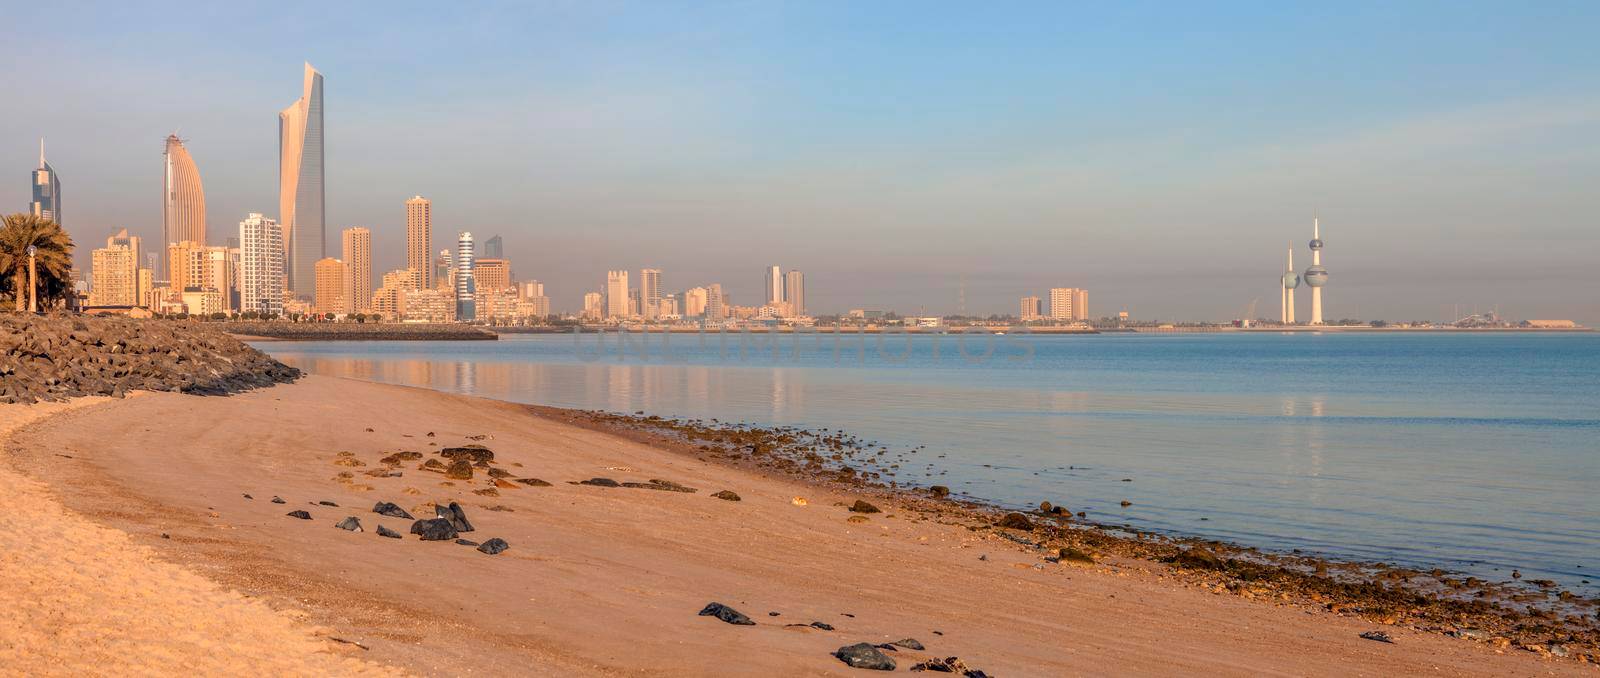 Panorama of Kuwait City from the beach. City. Kuwait City, Kuwait.